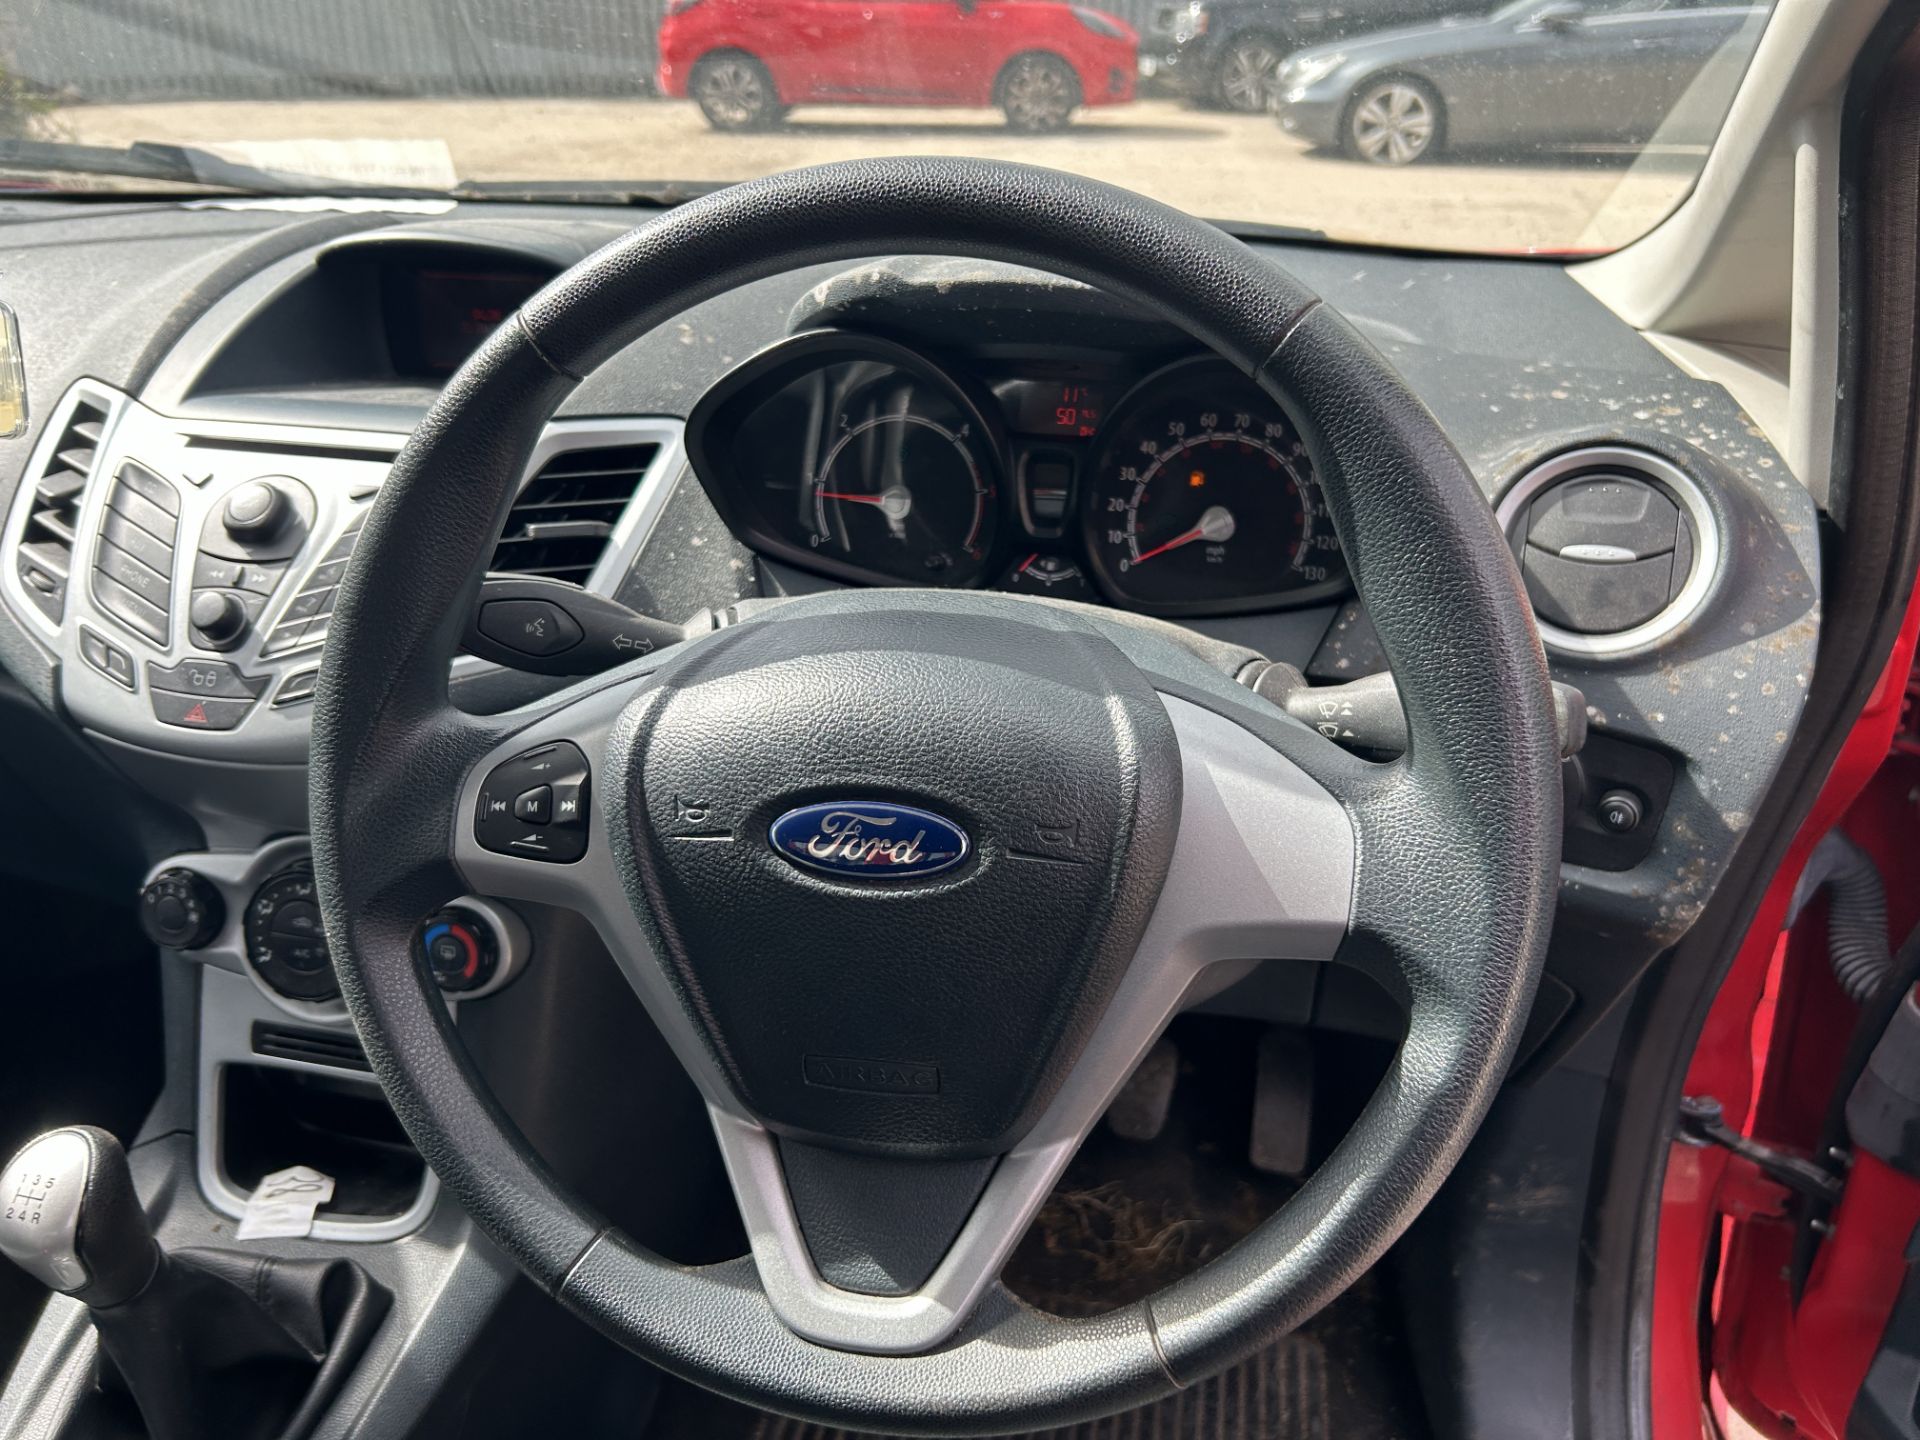 Ford Fiesta Edge TDCI 70 Diesel 5 Door Hatchback | MV12 ZVZ | 59,487 Miles - Image 14 of 15